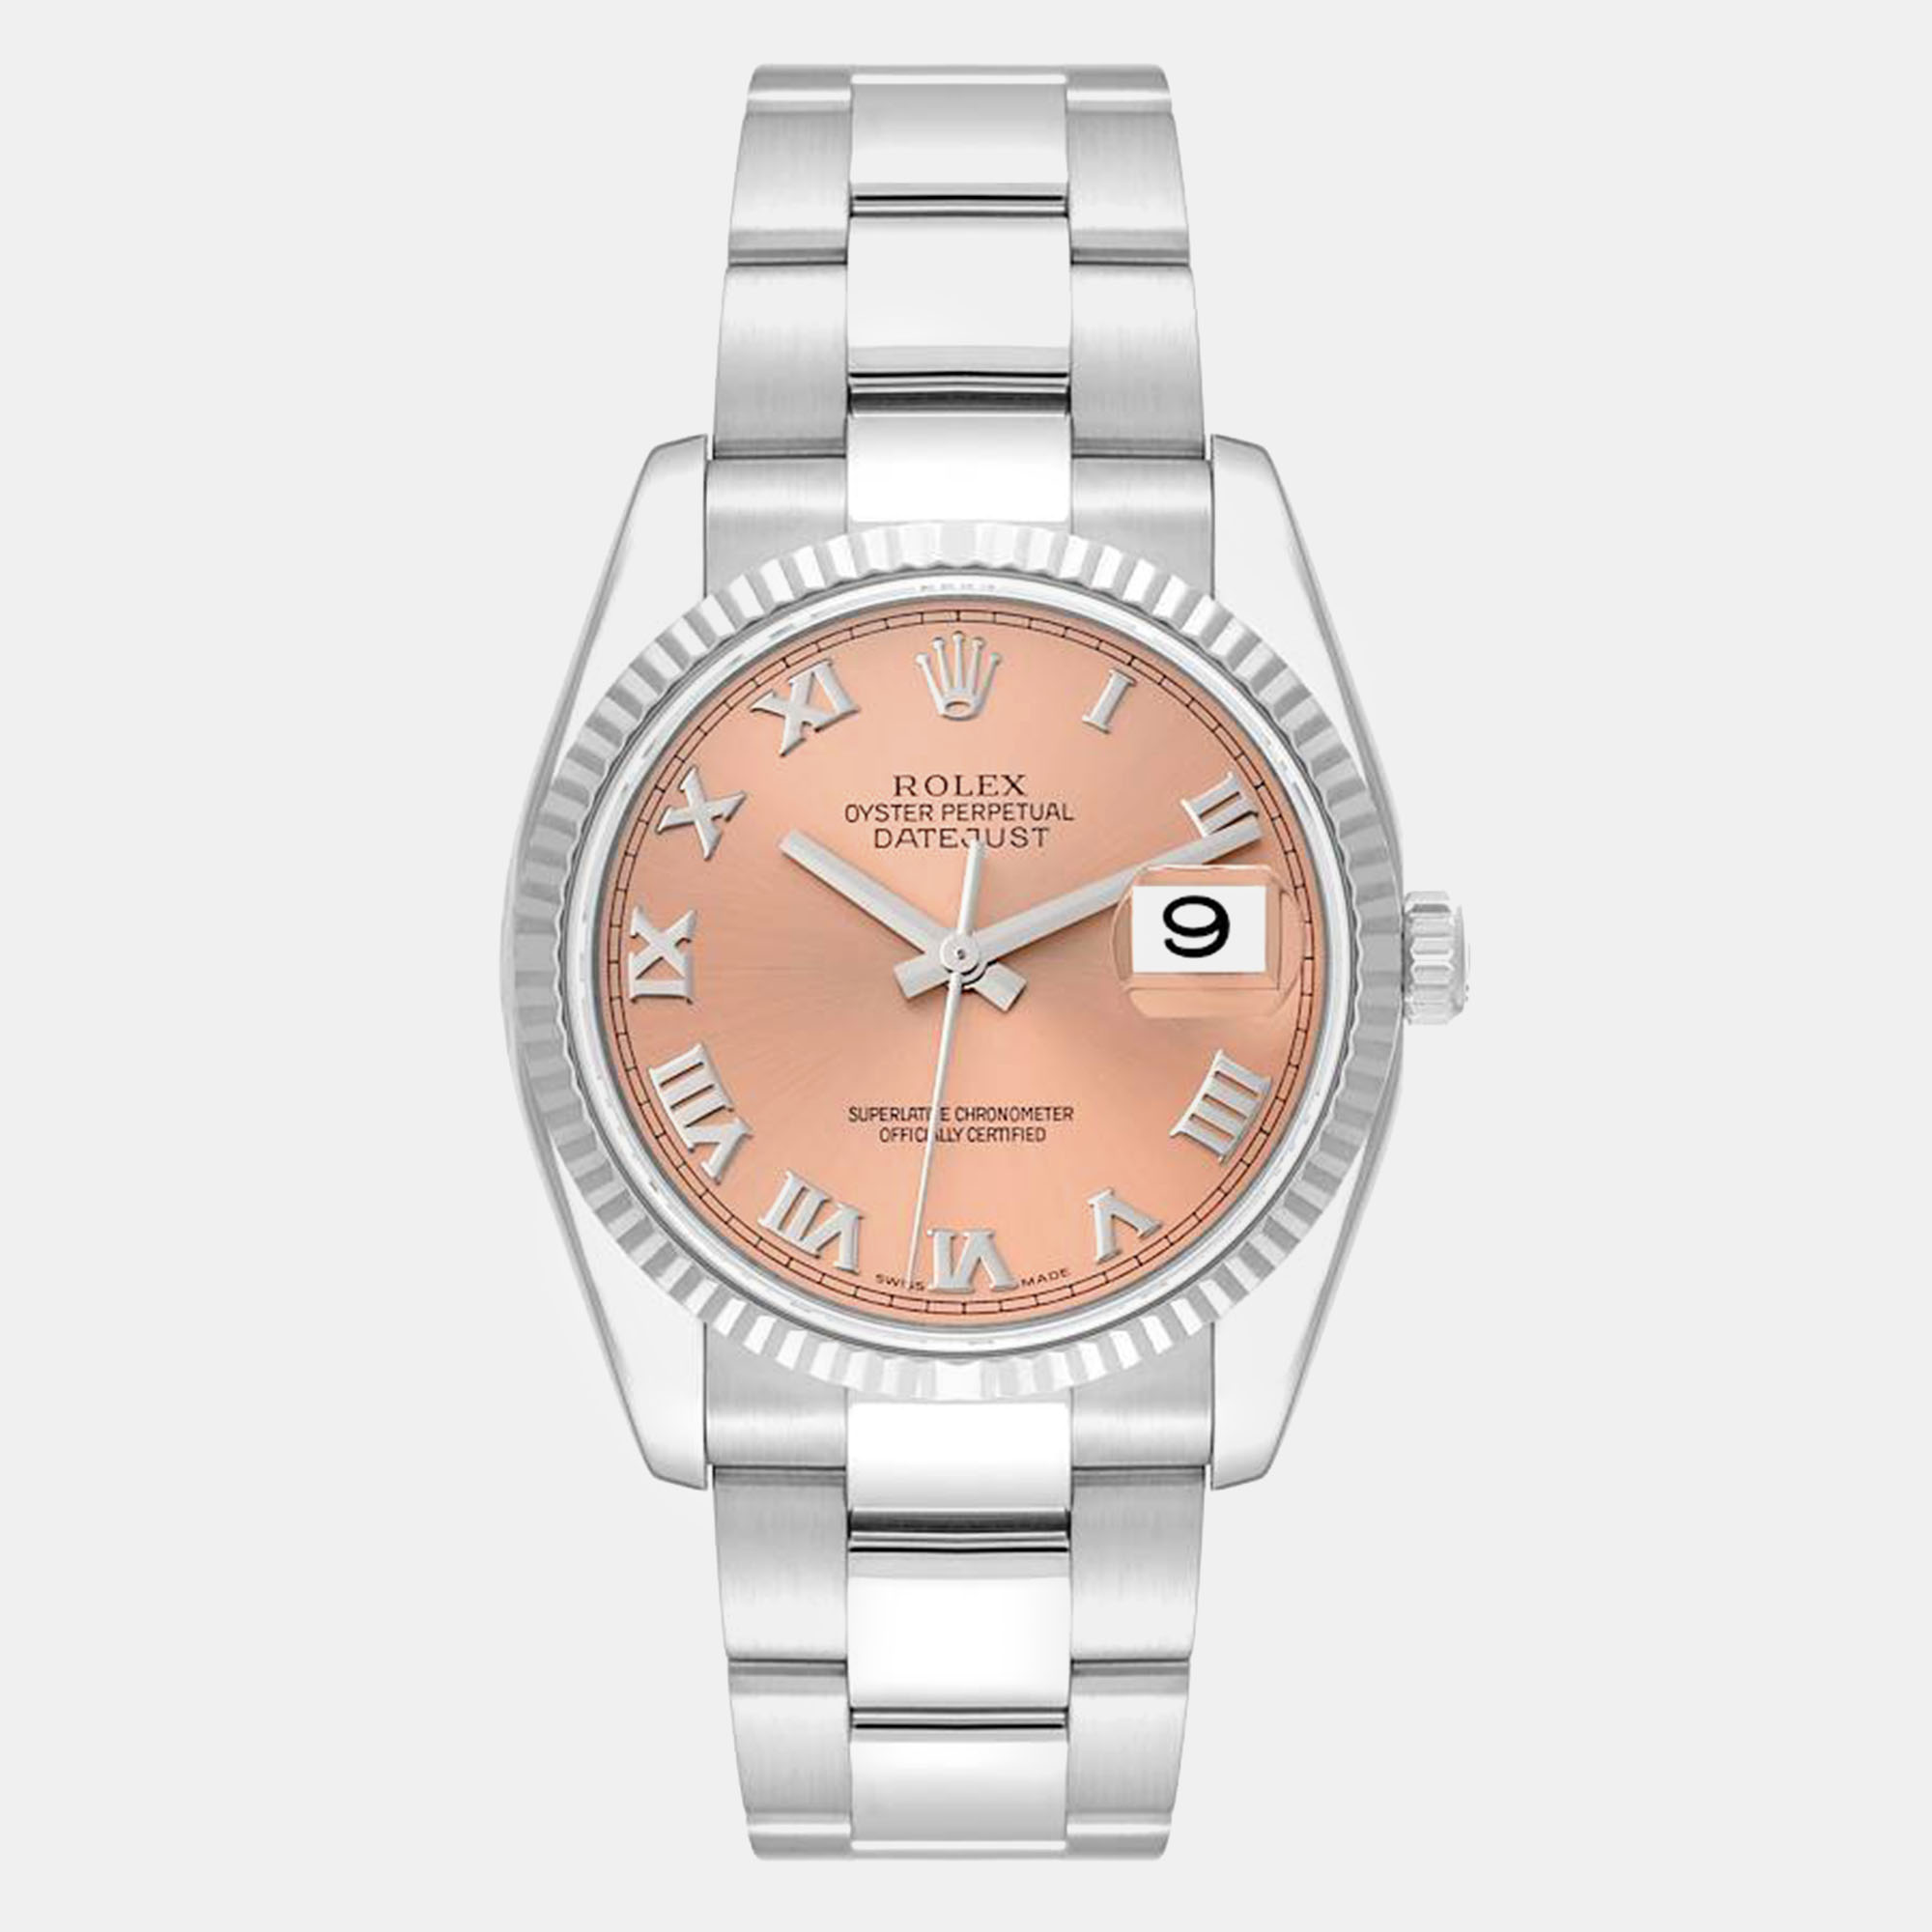 Rolex datejust steel white gold salmon roman dial men's watch 36 mm